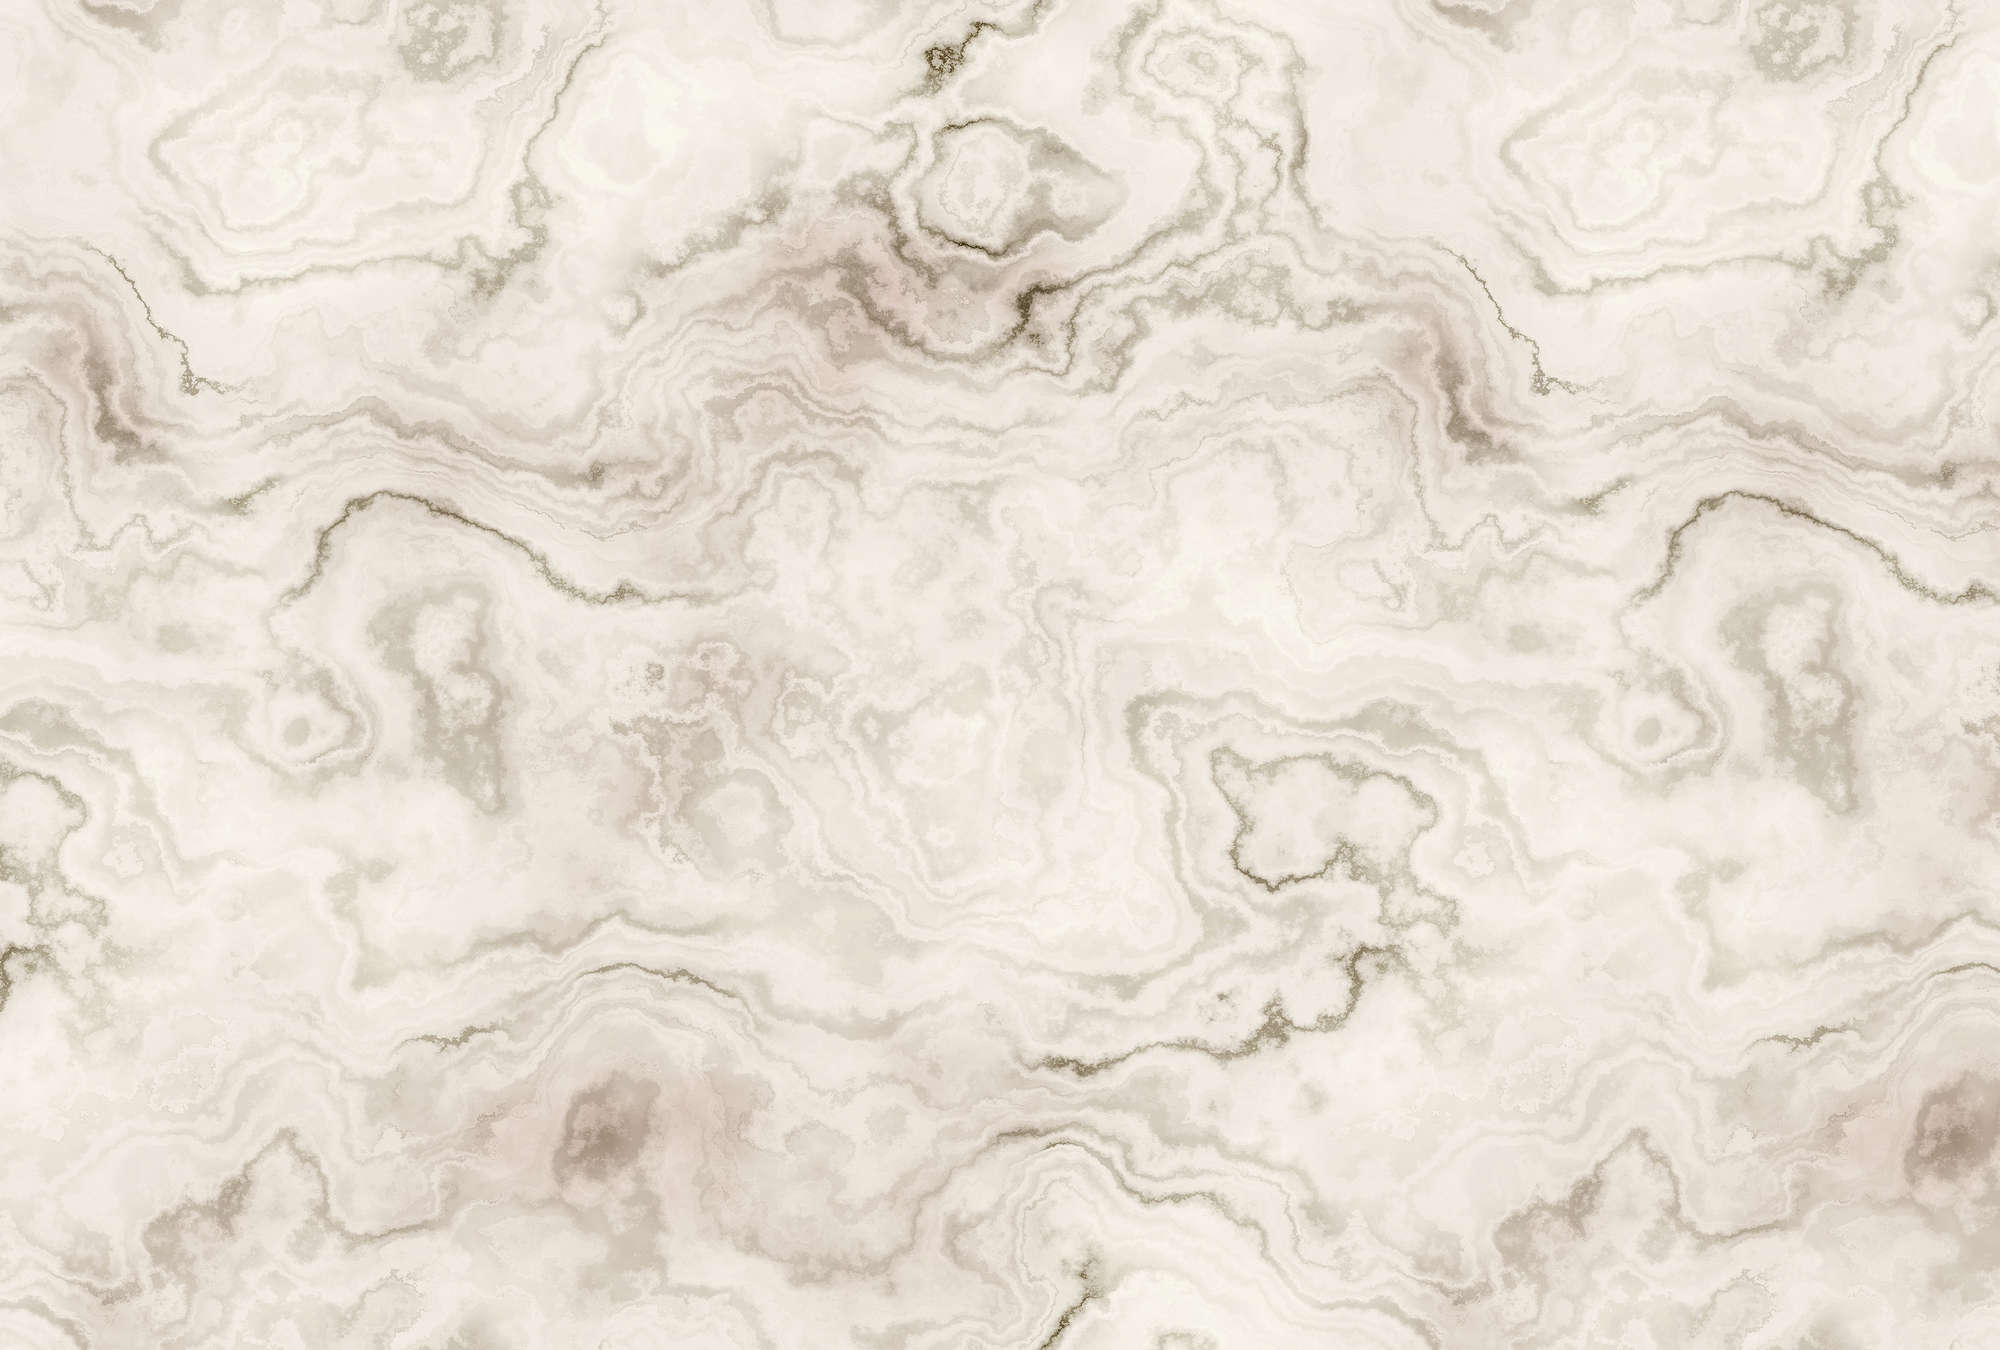             Carrara 2 - Papel pintado elegante efecto mármol - Beige, Marrón | Liso mate
        